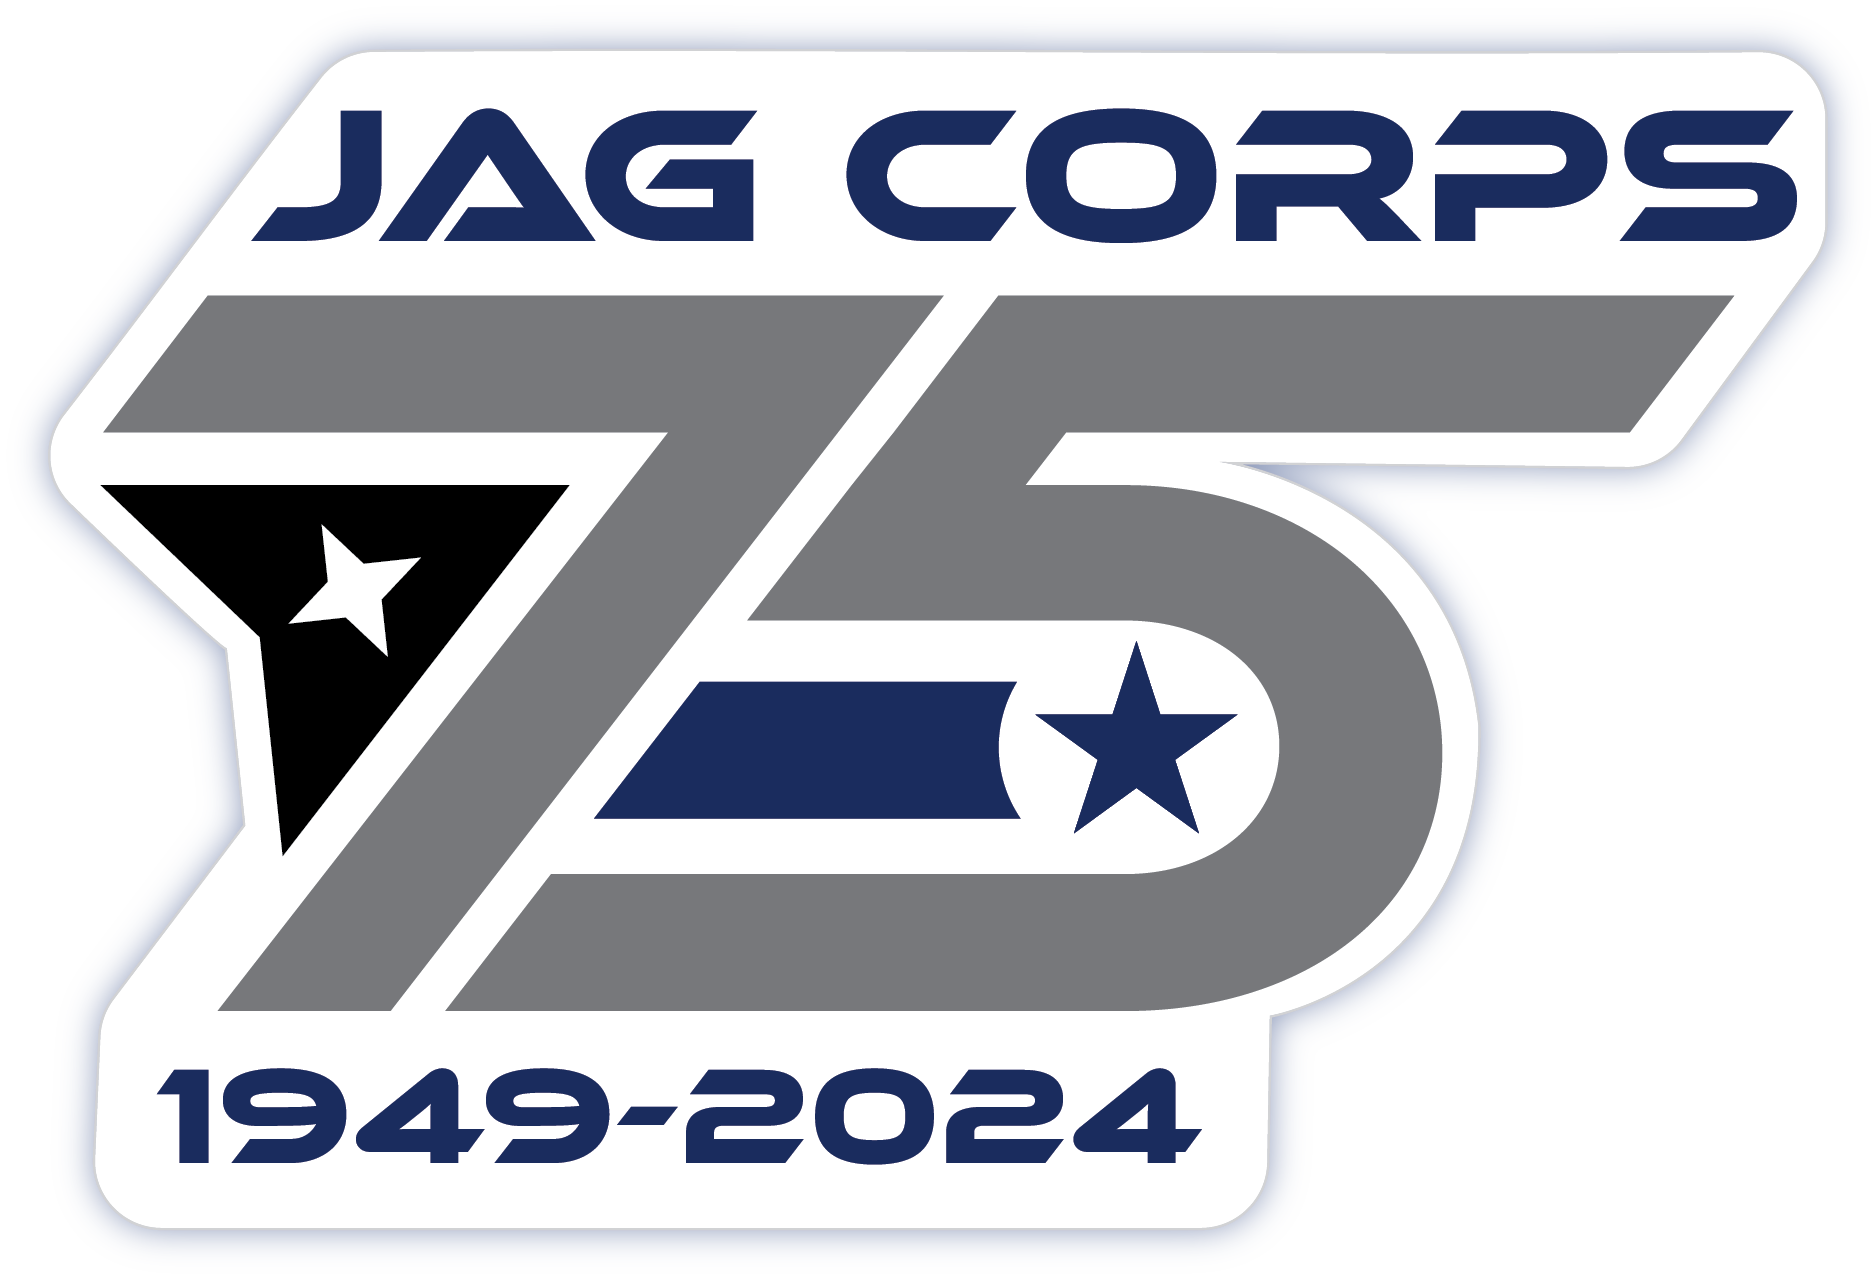 JAG Corps 75th Anniversary Logo